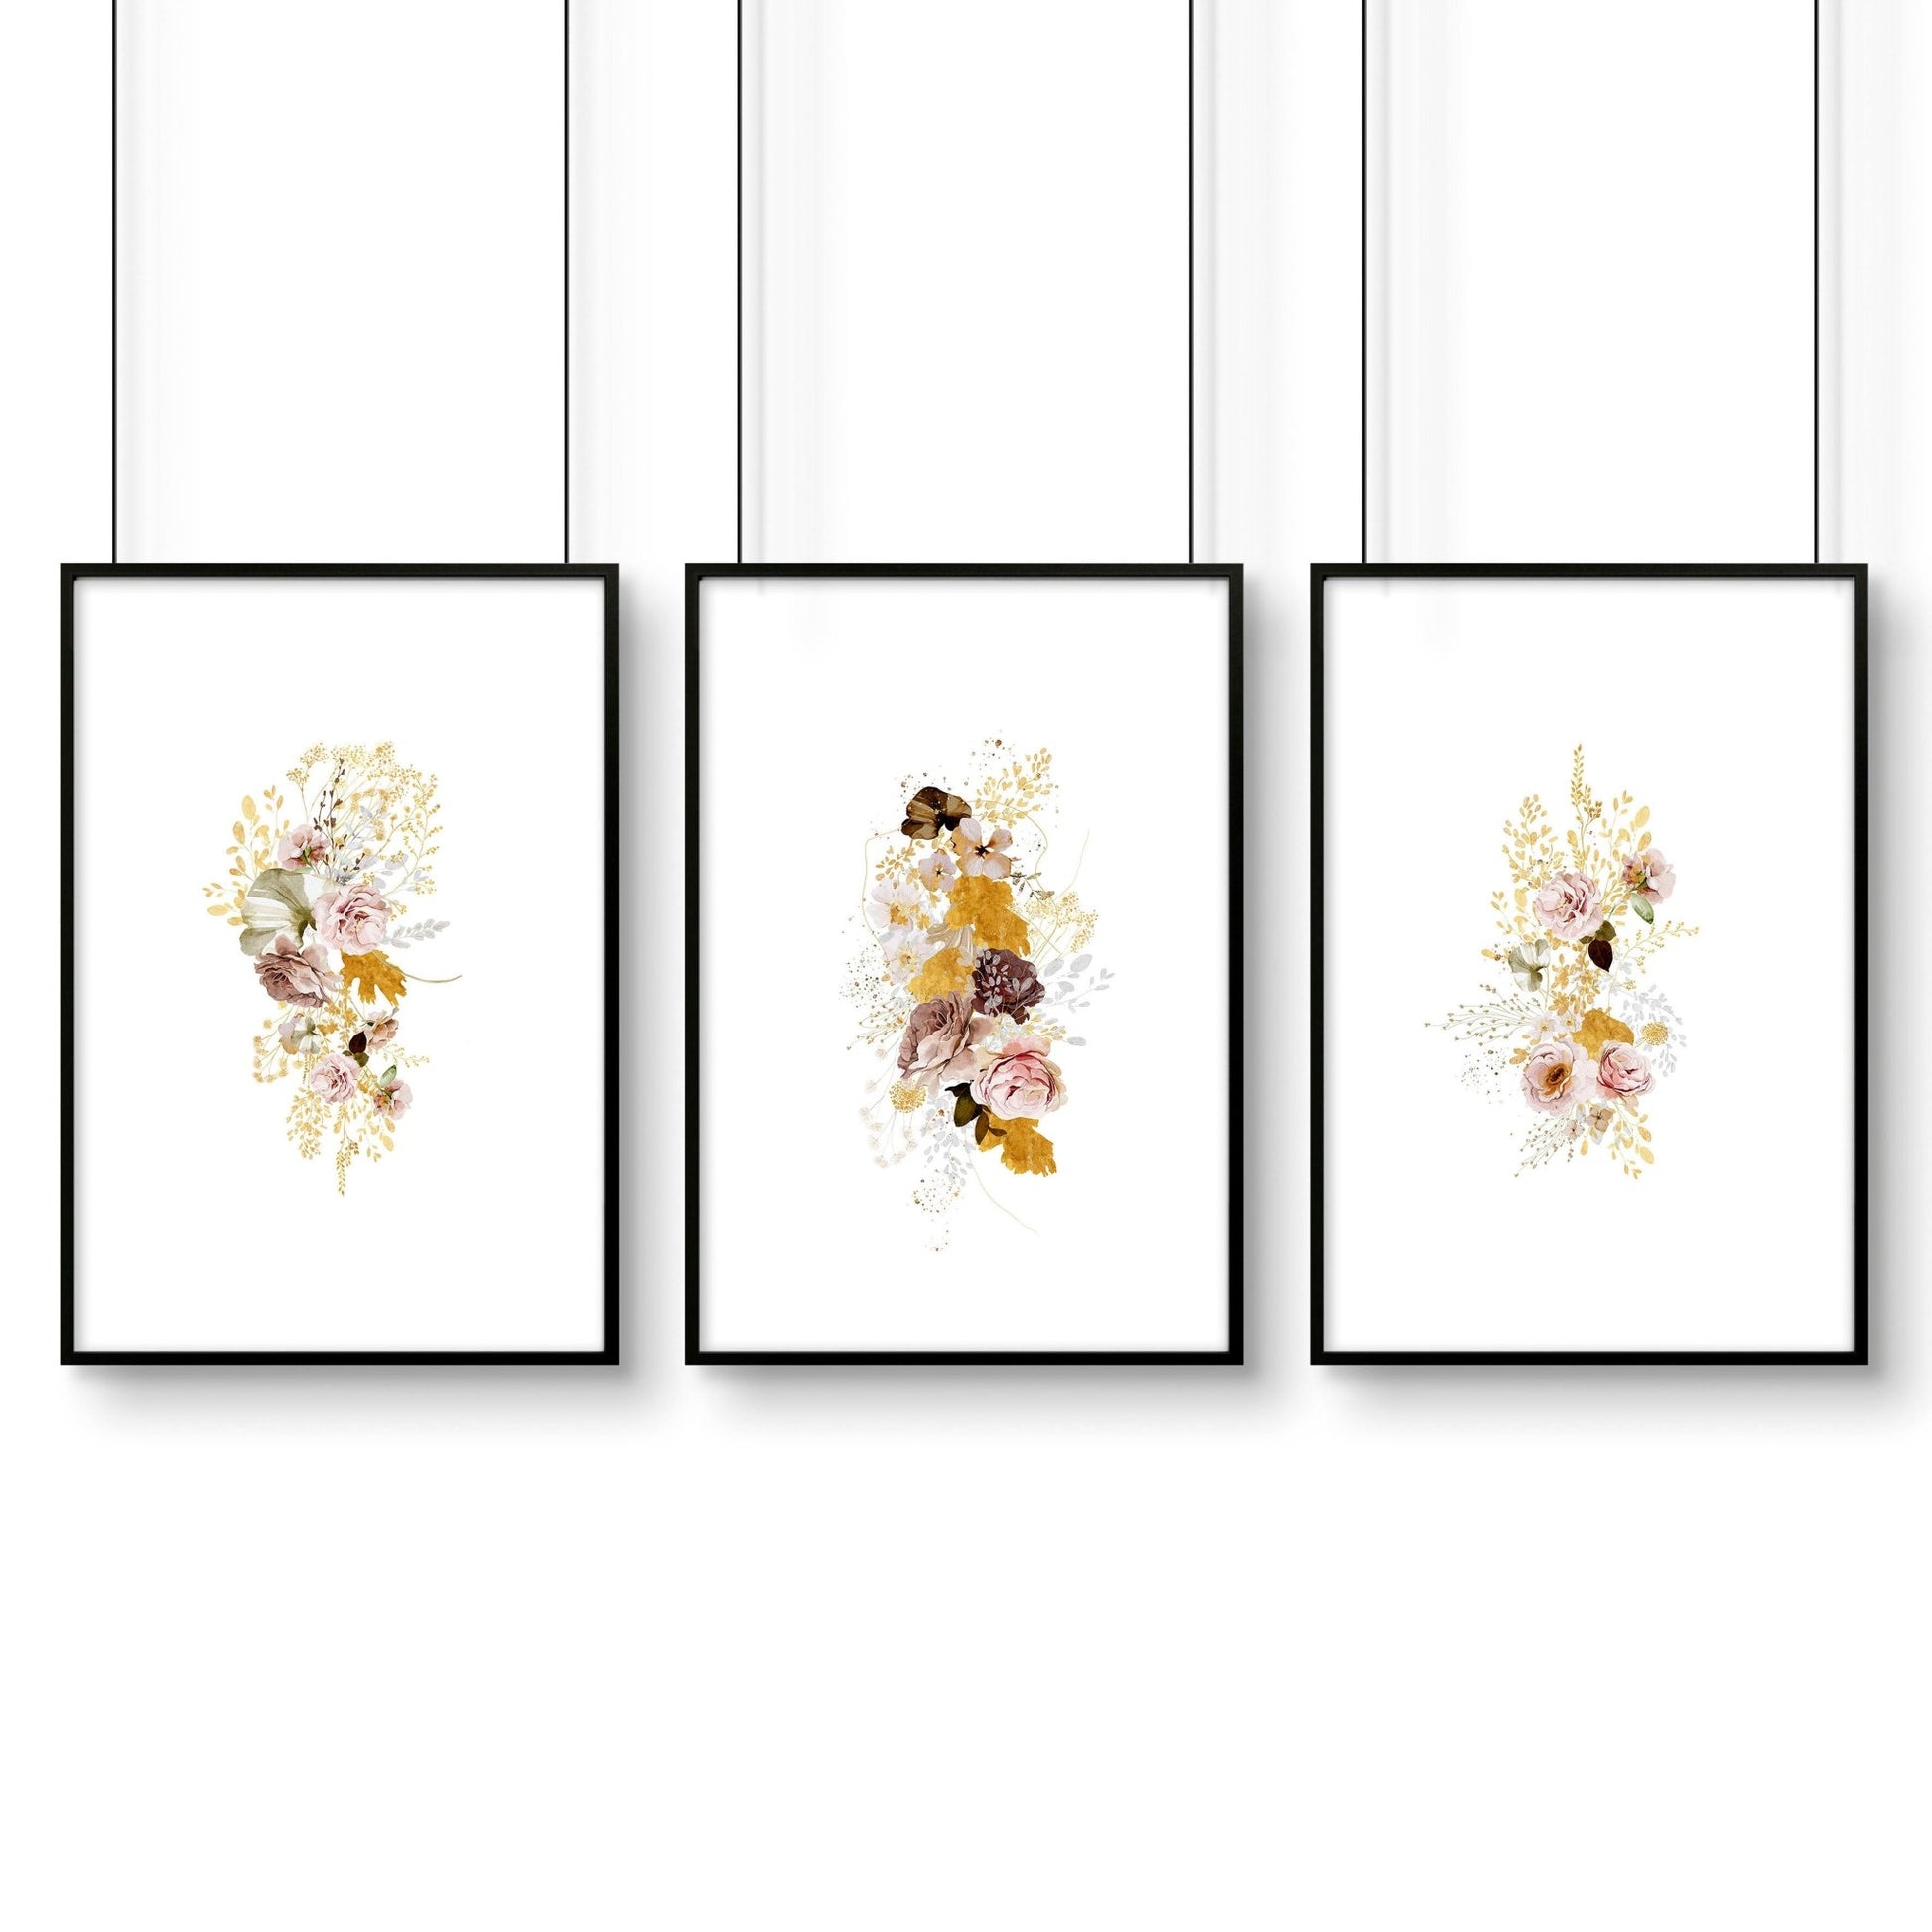 Botanical prints for kitchen wall | set of 3 wall art prints - About Wall Art